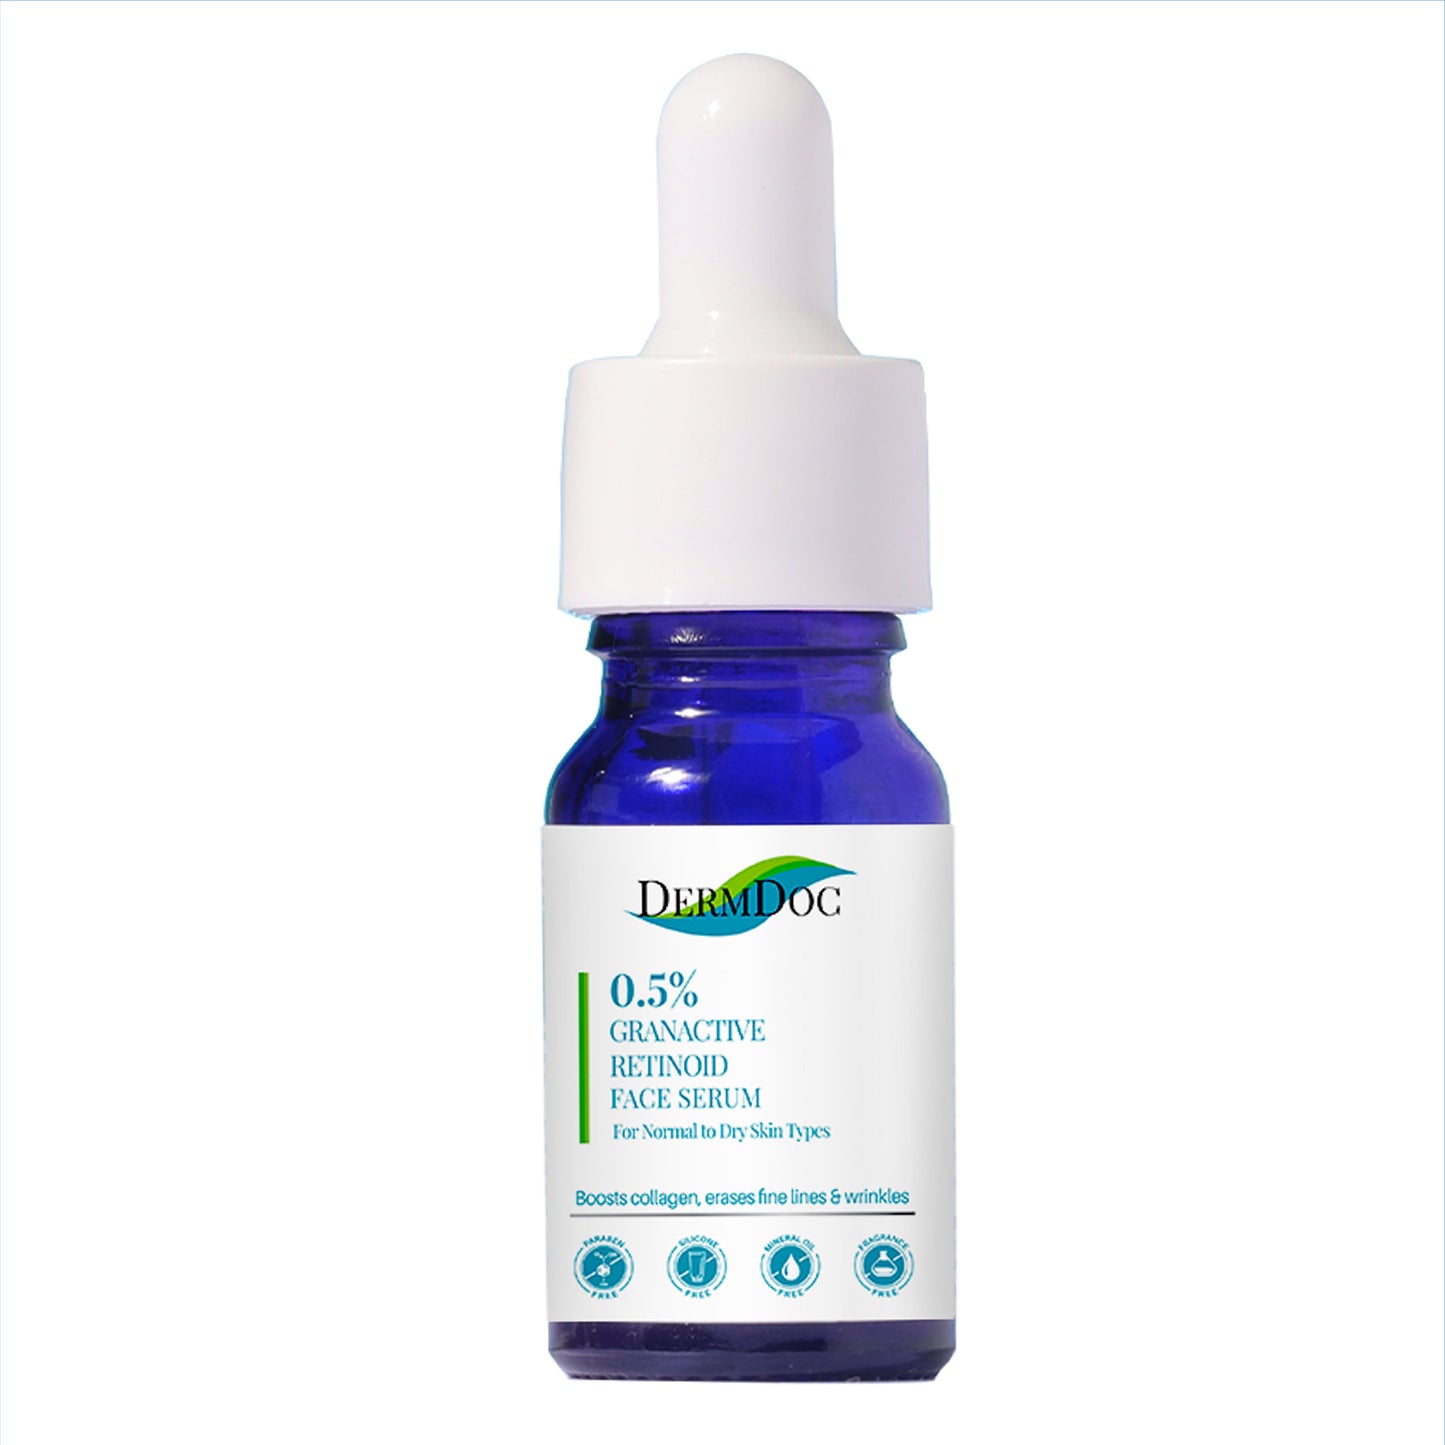 dermdoc-0-5-percentage-granactive-retinoid-face-serum-10-ml-12